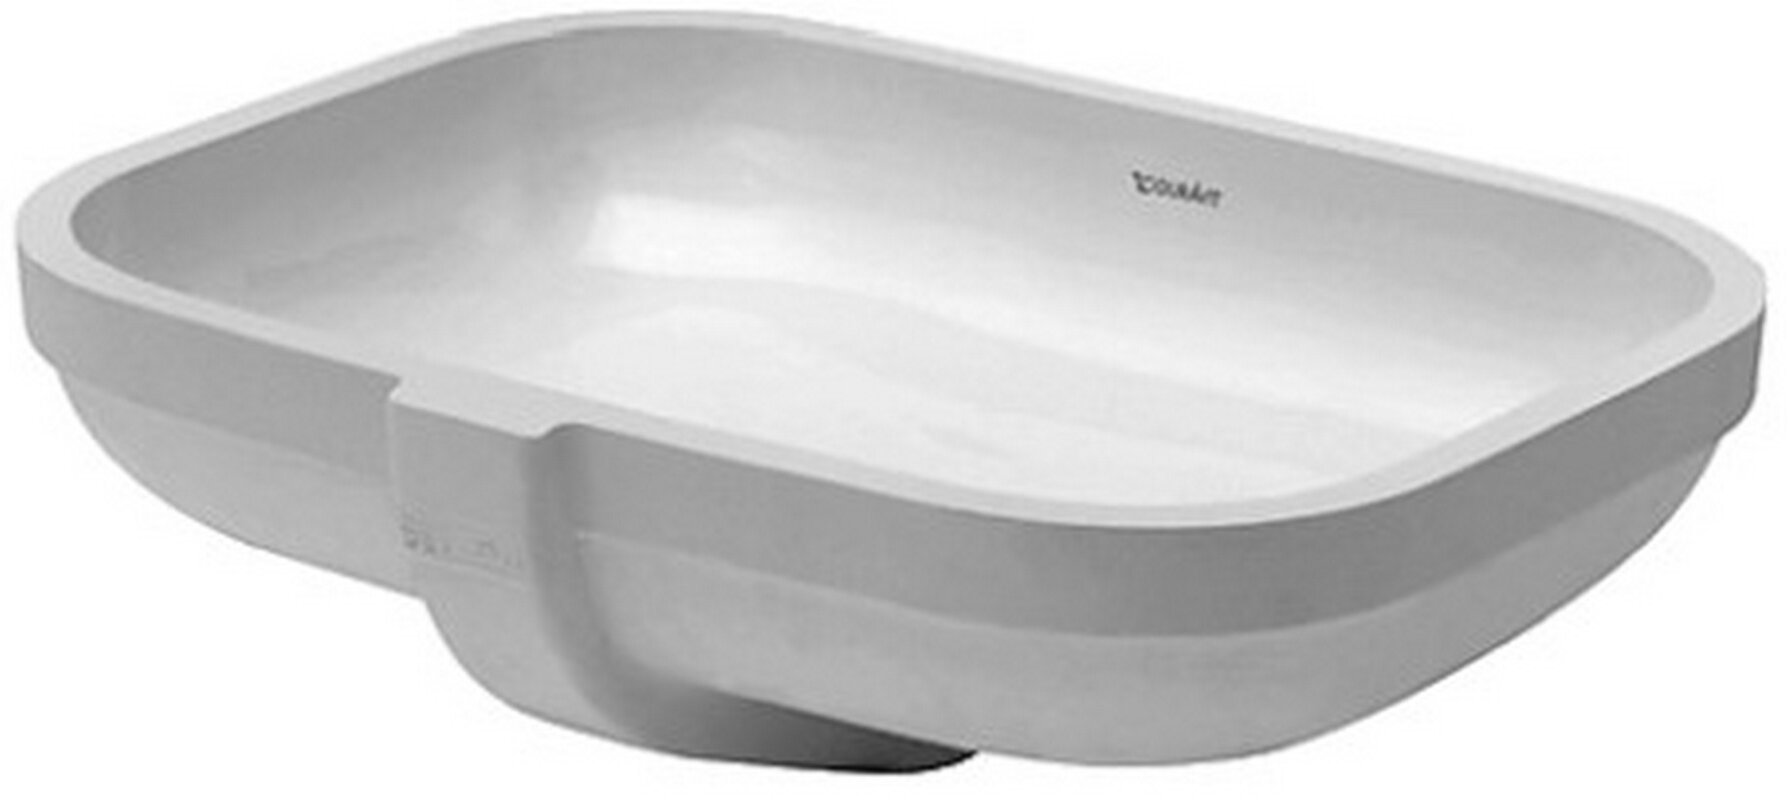 kdk-b34 ceramic rectangular undermount bathroom sink